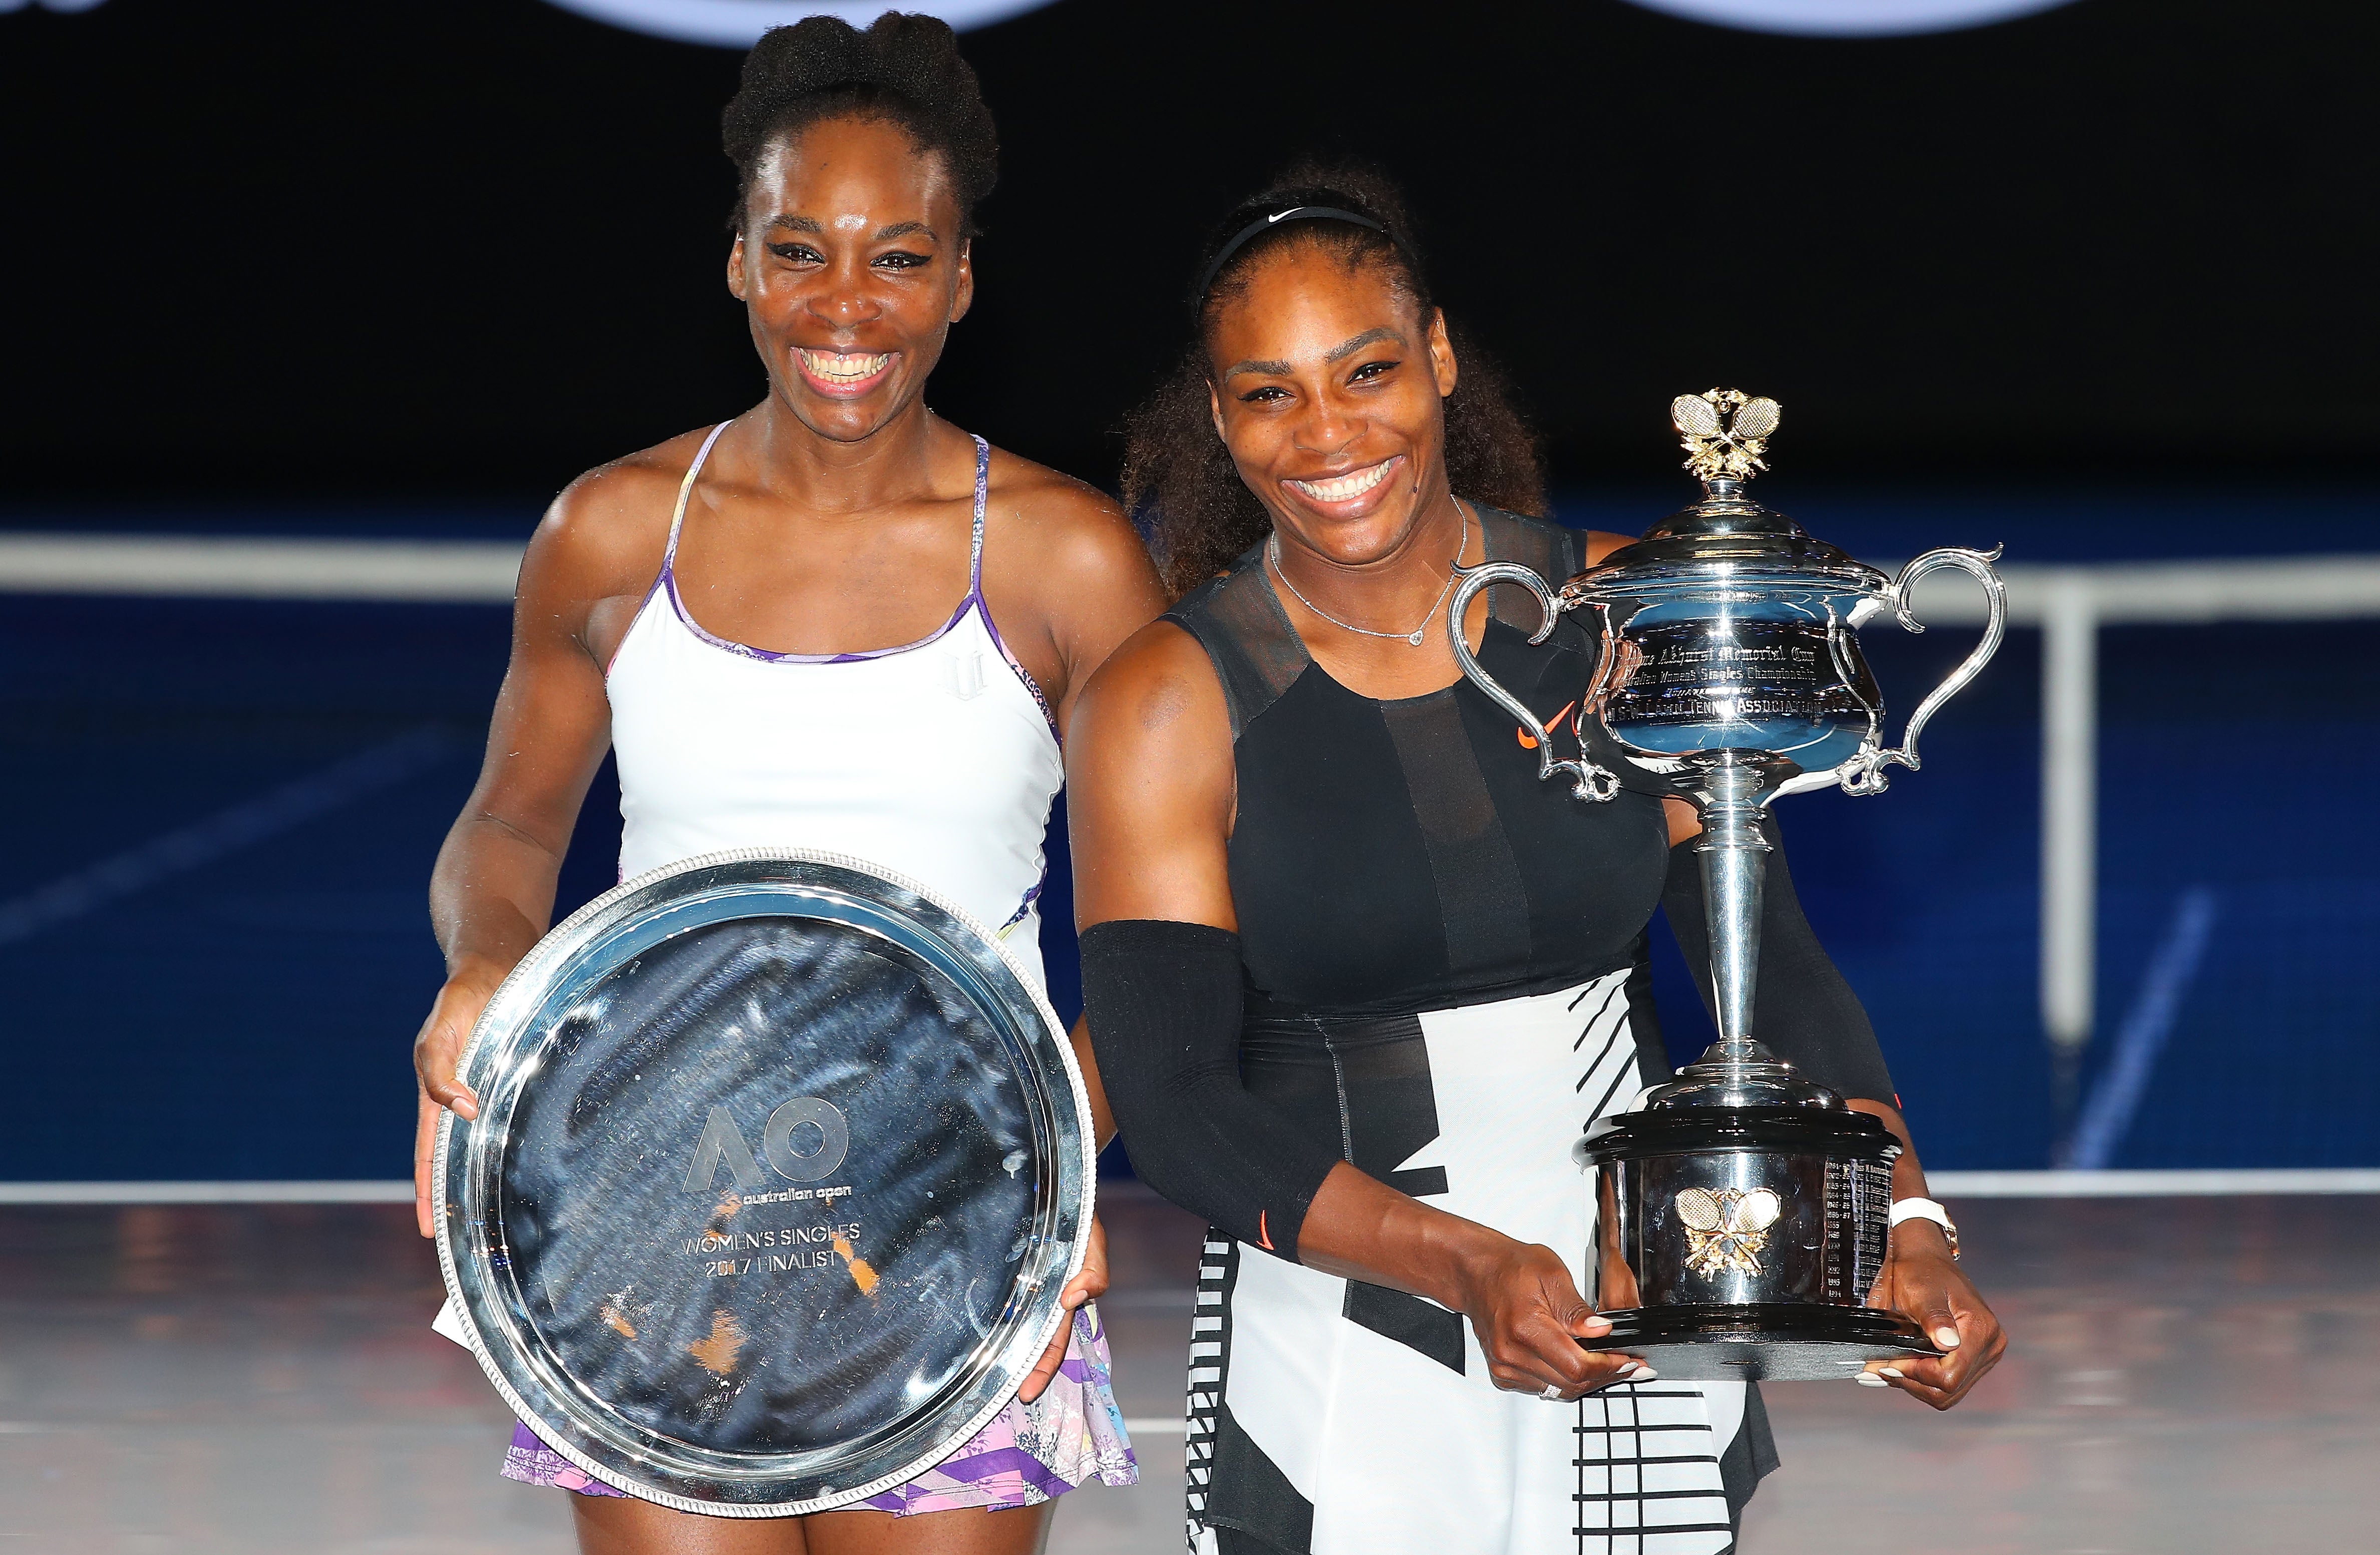 Serena Defeats Sister Venus To Clench Historic 23rd Grand Slam Title
